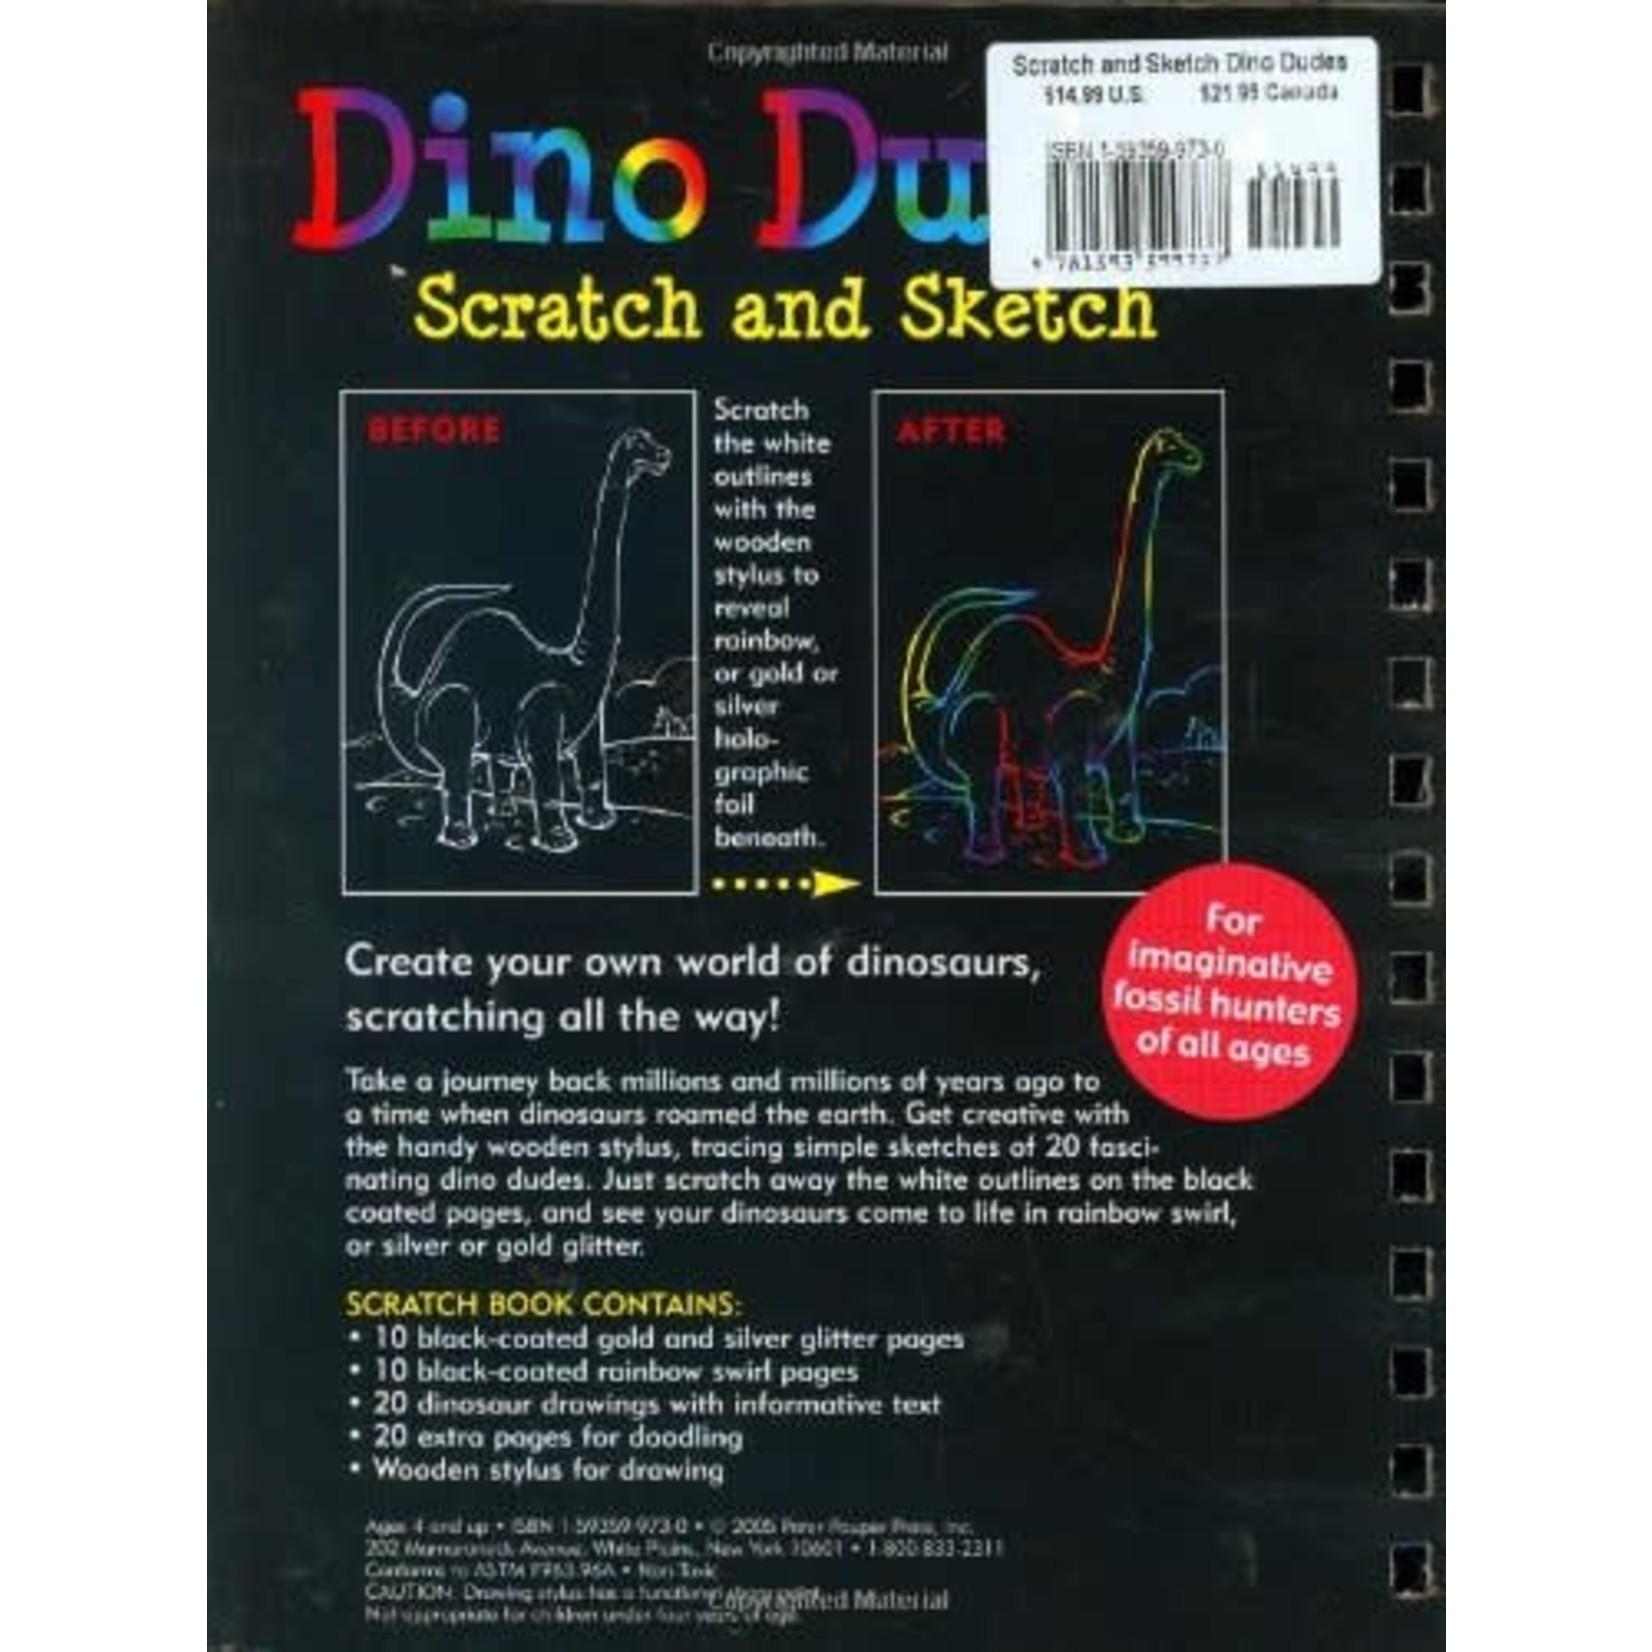 Peter Pauper Press Scratch & Sketch, Dino Dudes (Trace-Along)